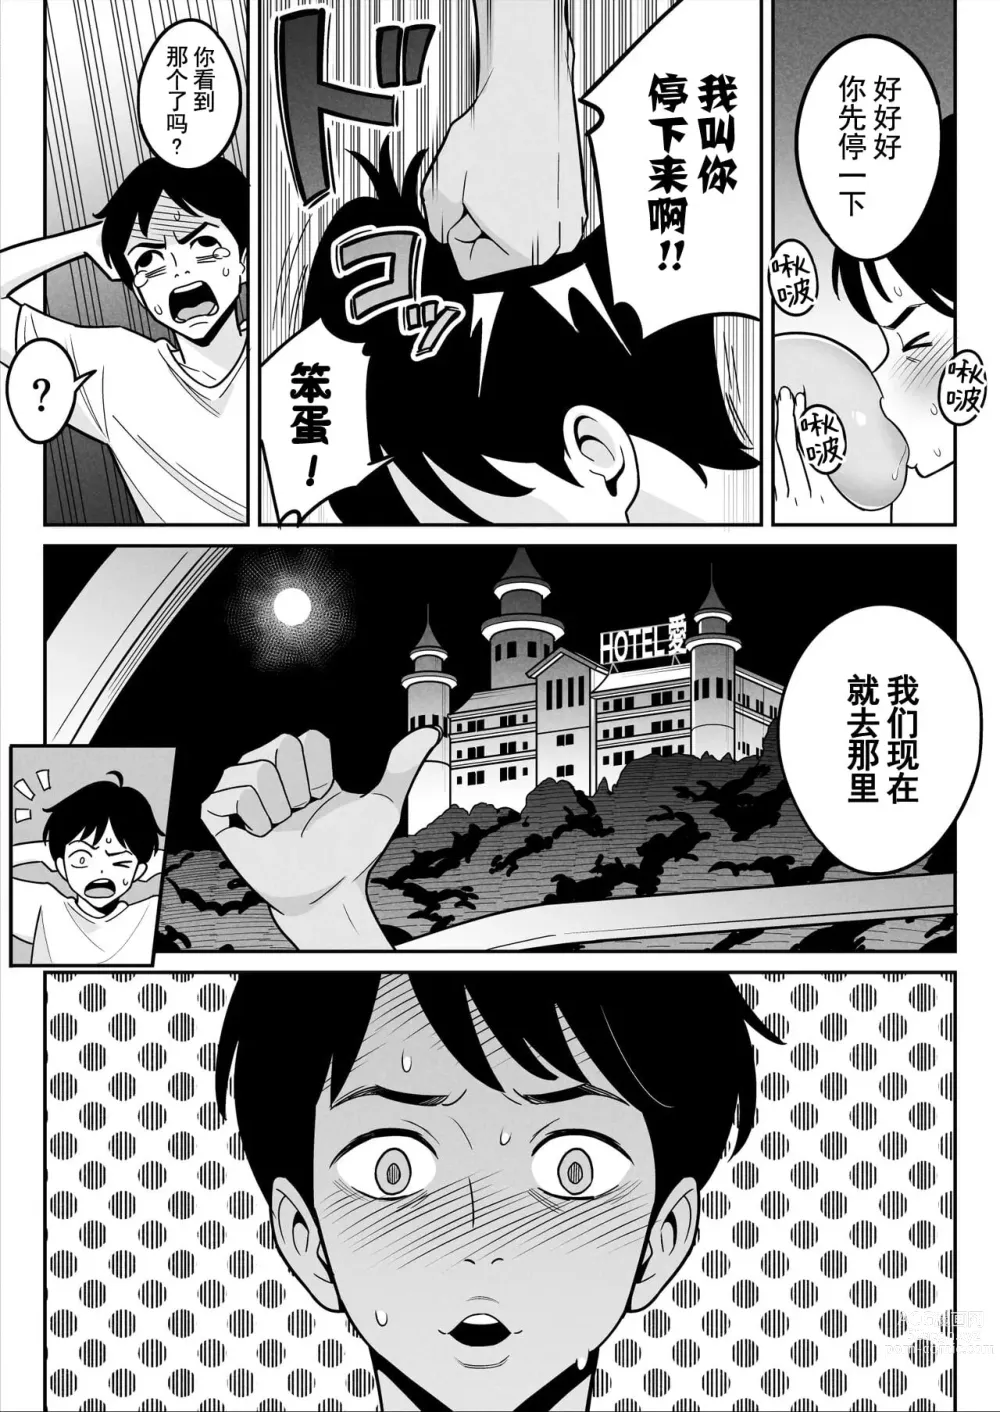 Page 20 of manga Muchi Niku Heaven de Pan Pan Pan